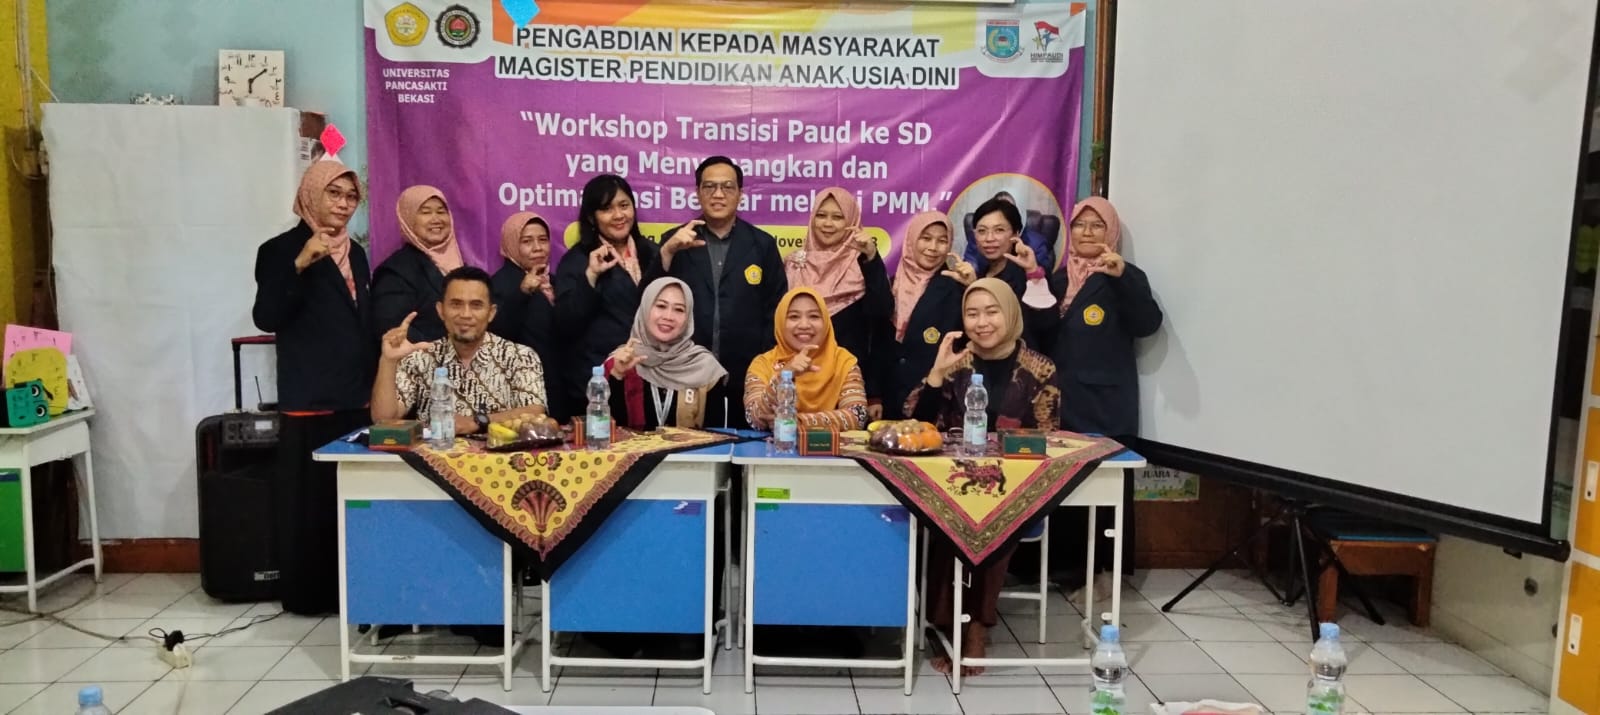 Gelar Workshop, Mahasiswa Pascasarjana PAUD UPS Bekasi Kupas Tuntas Transisi PAUD ke SD yang Menyenangkan dan PMM